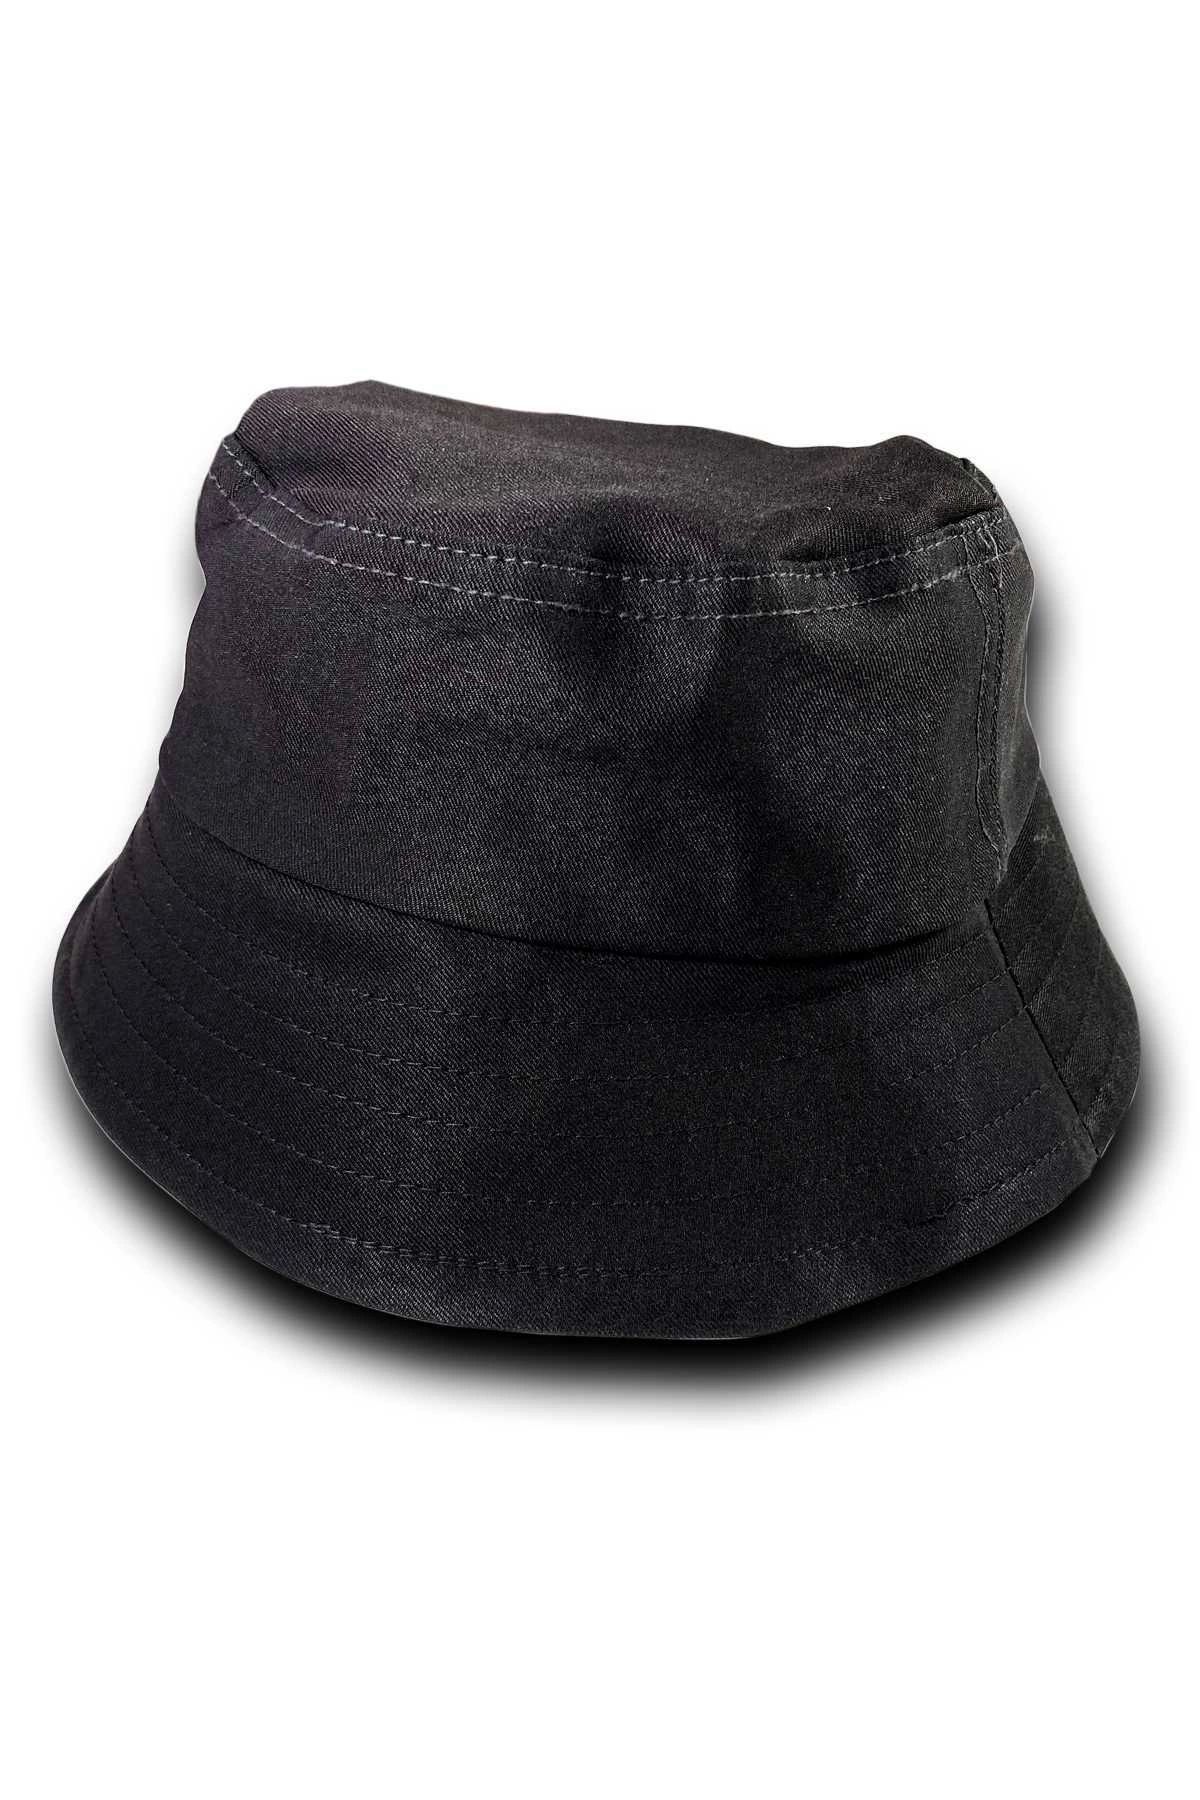 Royaleks Unisex Kova Şapka Balıkçı Şapka Bucket Hat Siyah